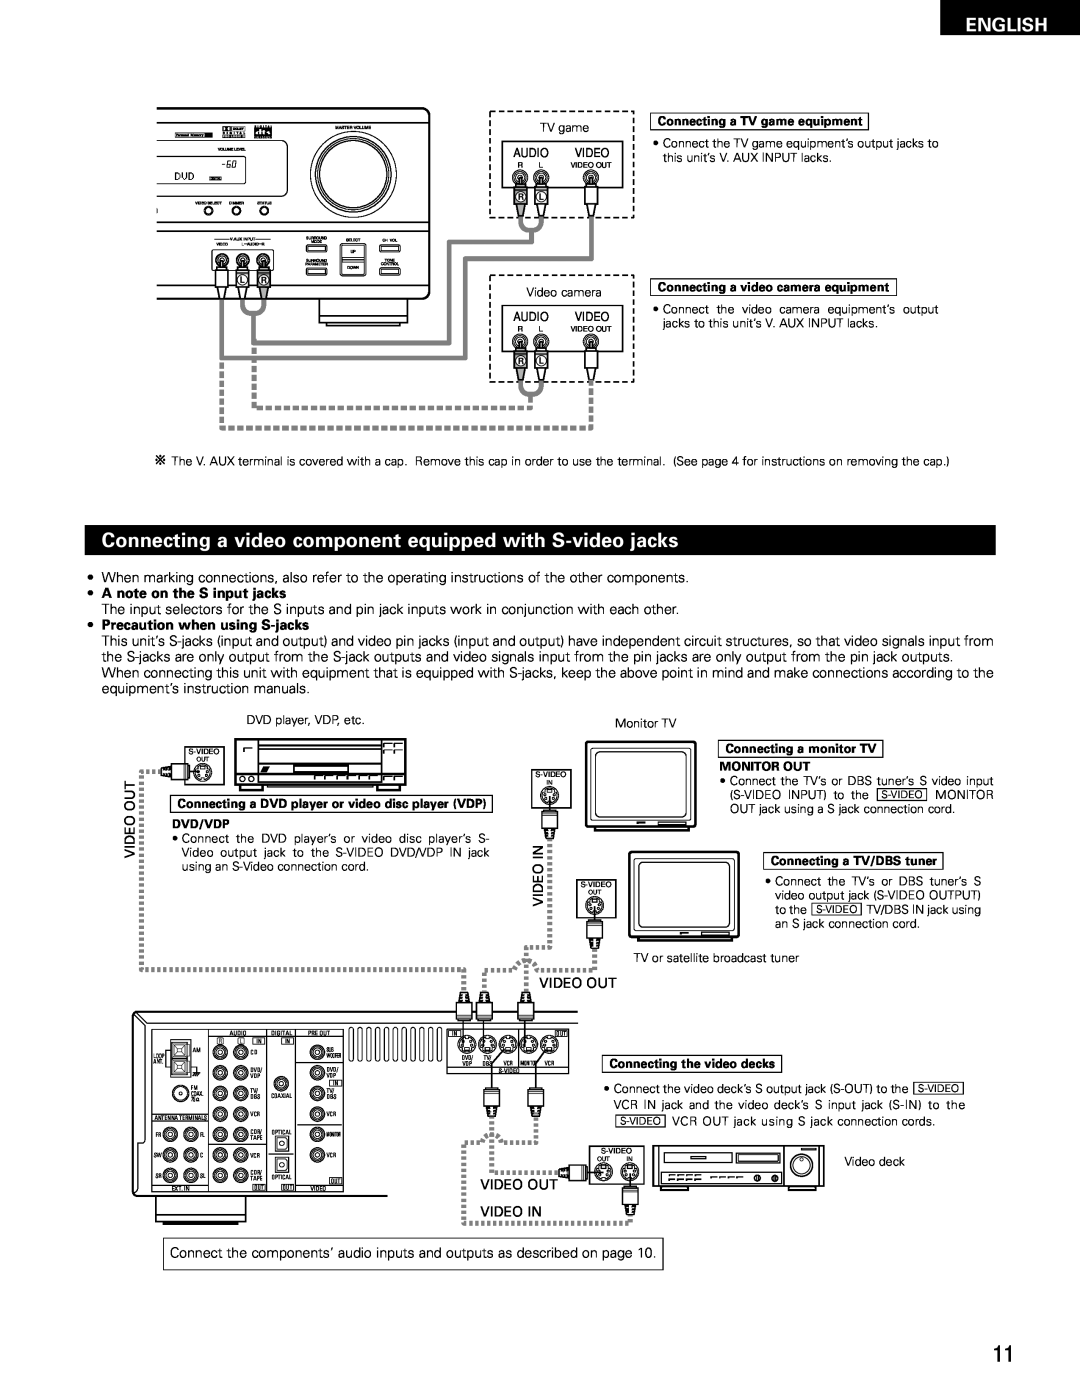 Denon AVR-682, AVR-1602 manual English, A note on the S input jacks, Precaution when using S-jacks 